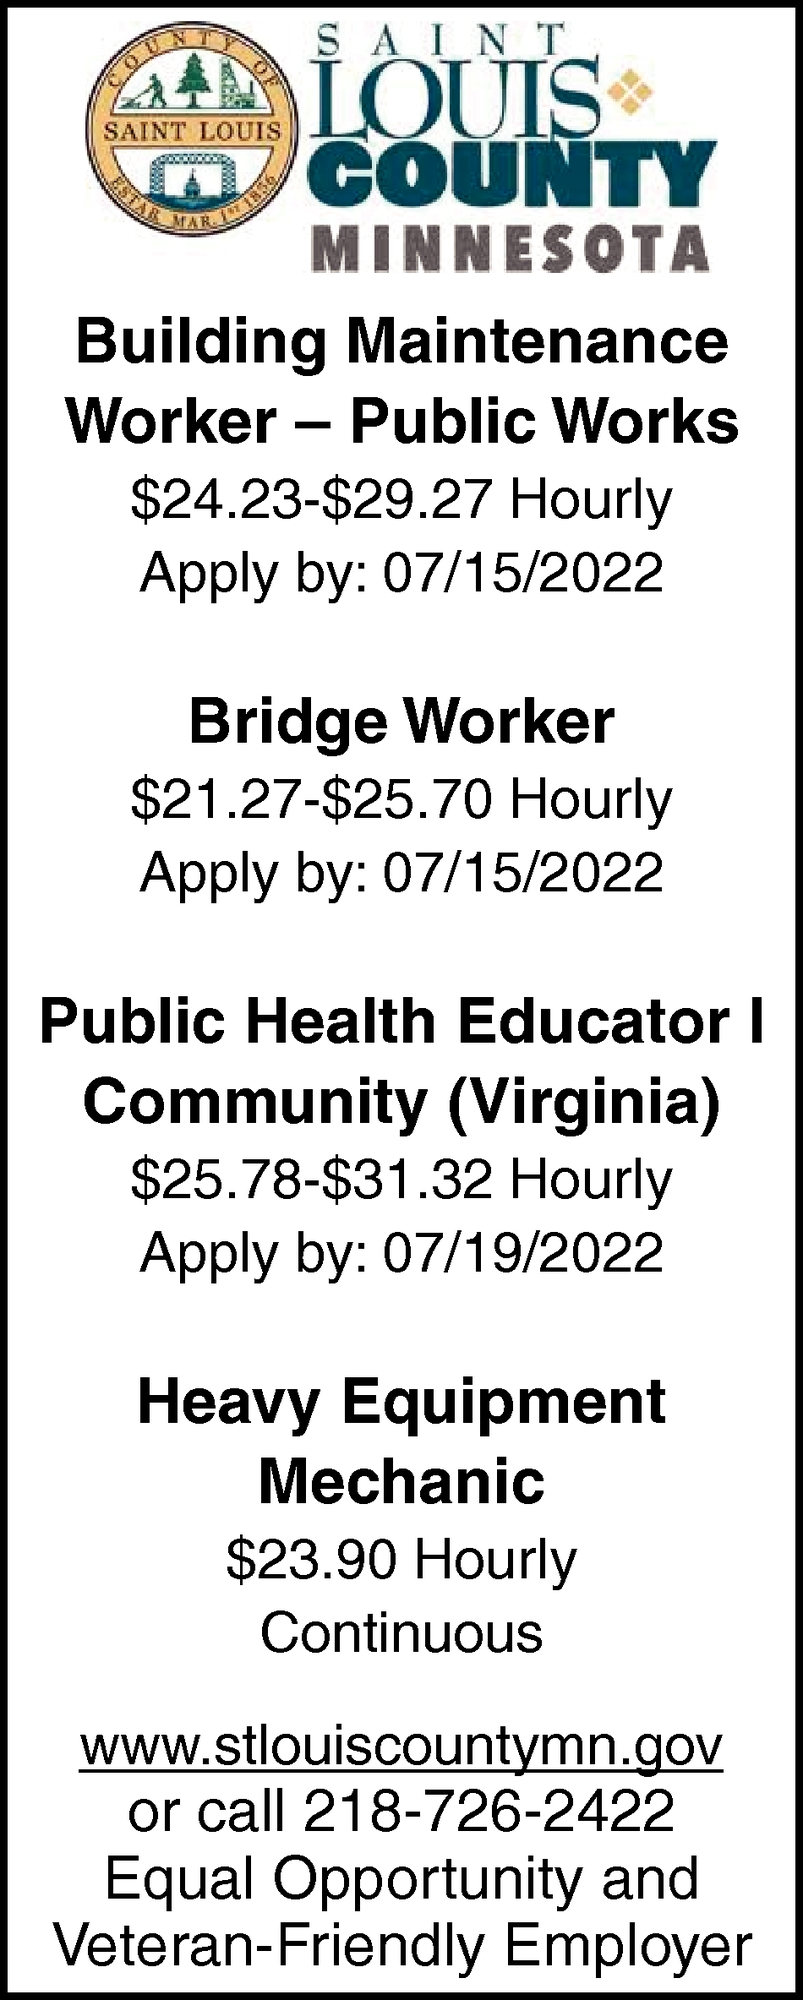 Building Maintenance Worker, Bridge Worker, Public Health Educator, Heavy Equipment Mechanic